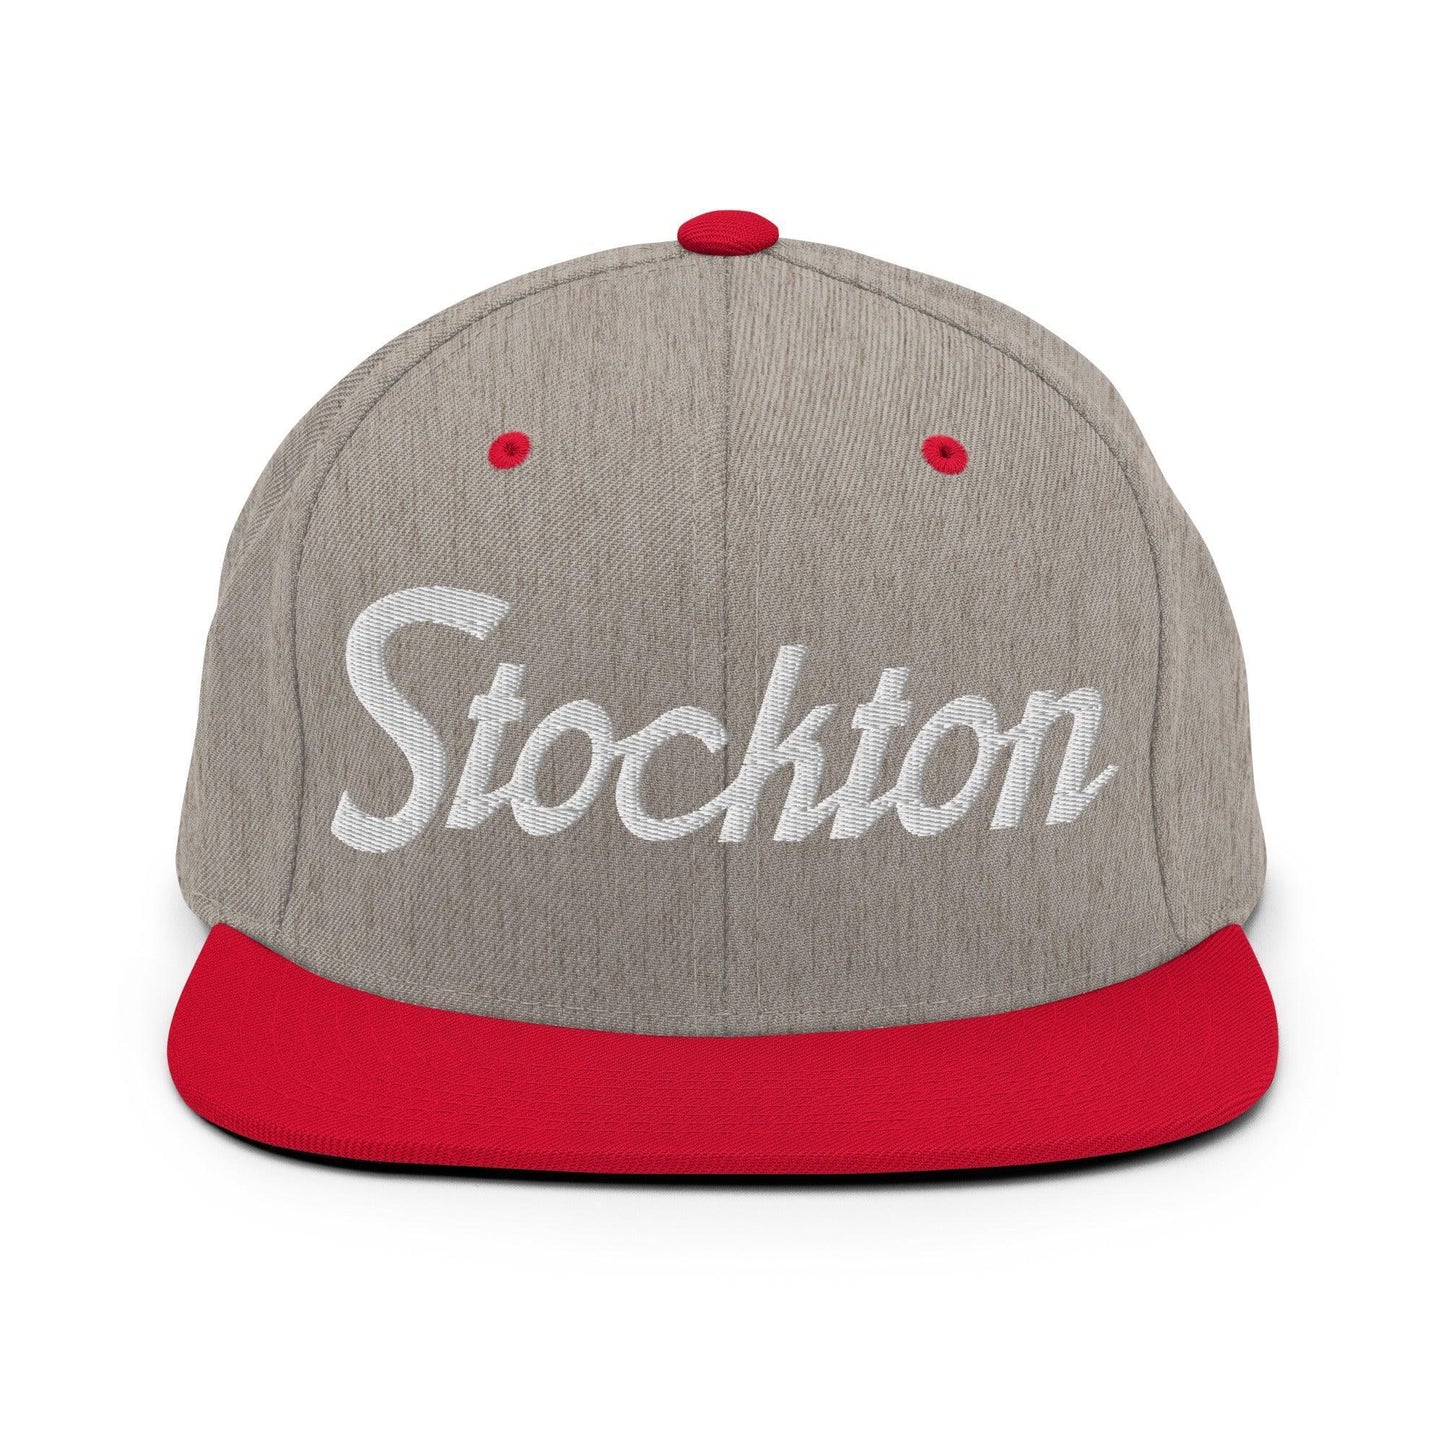 Stockton Script Snapback Hat Heather Grey/ Red